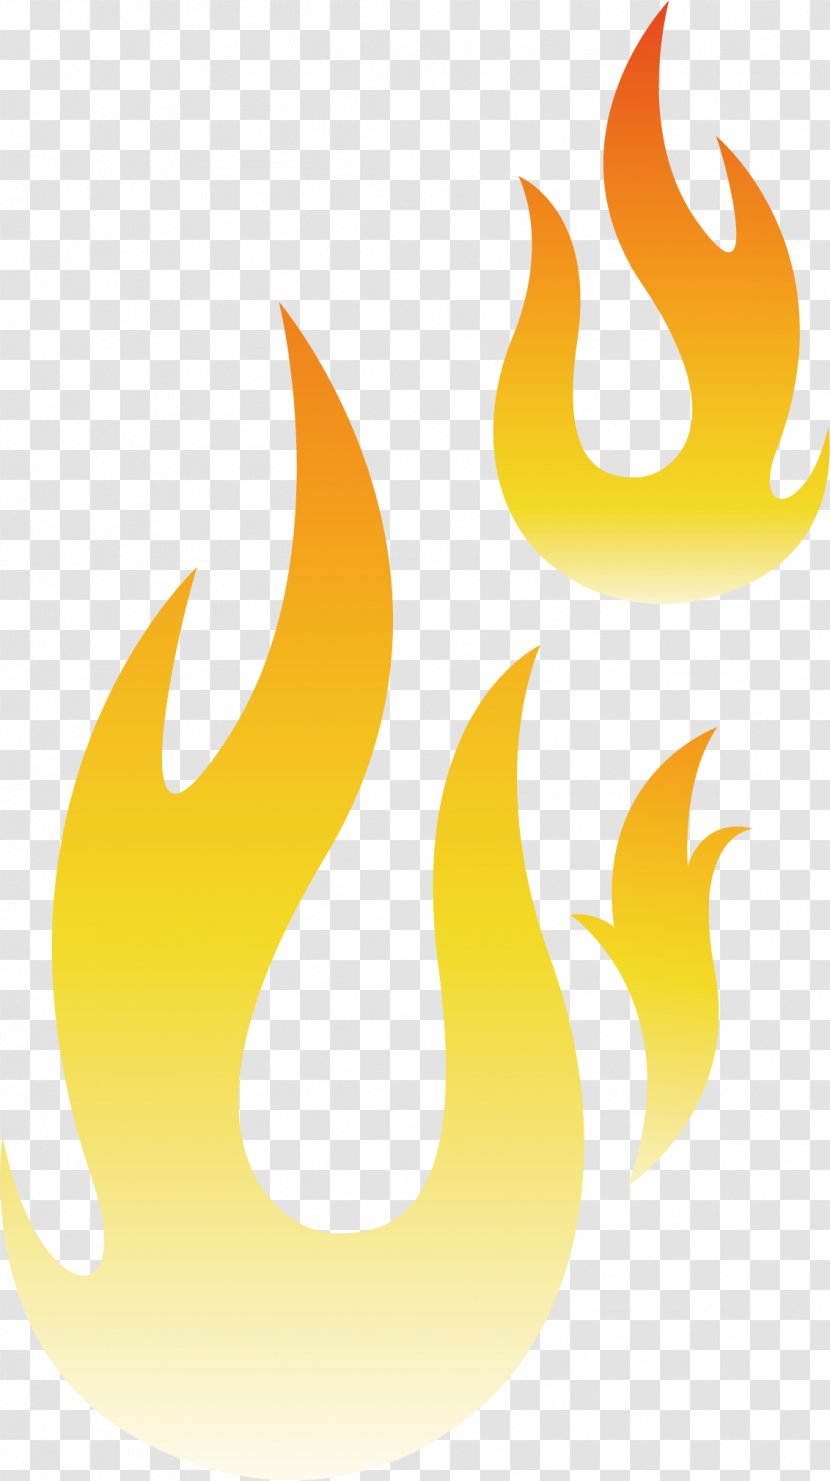 Flame Shape Clip Art - Symbol - Various Shapes Of Flames Transparent PNG